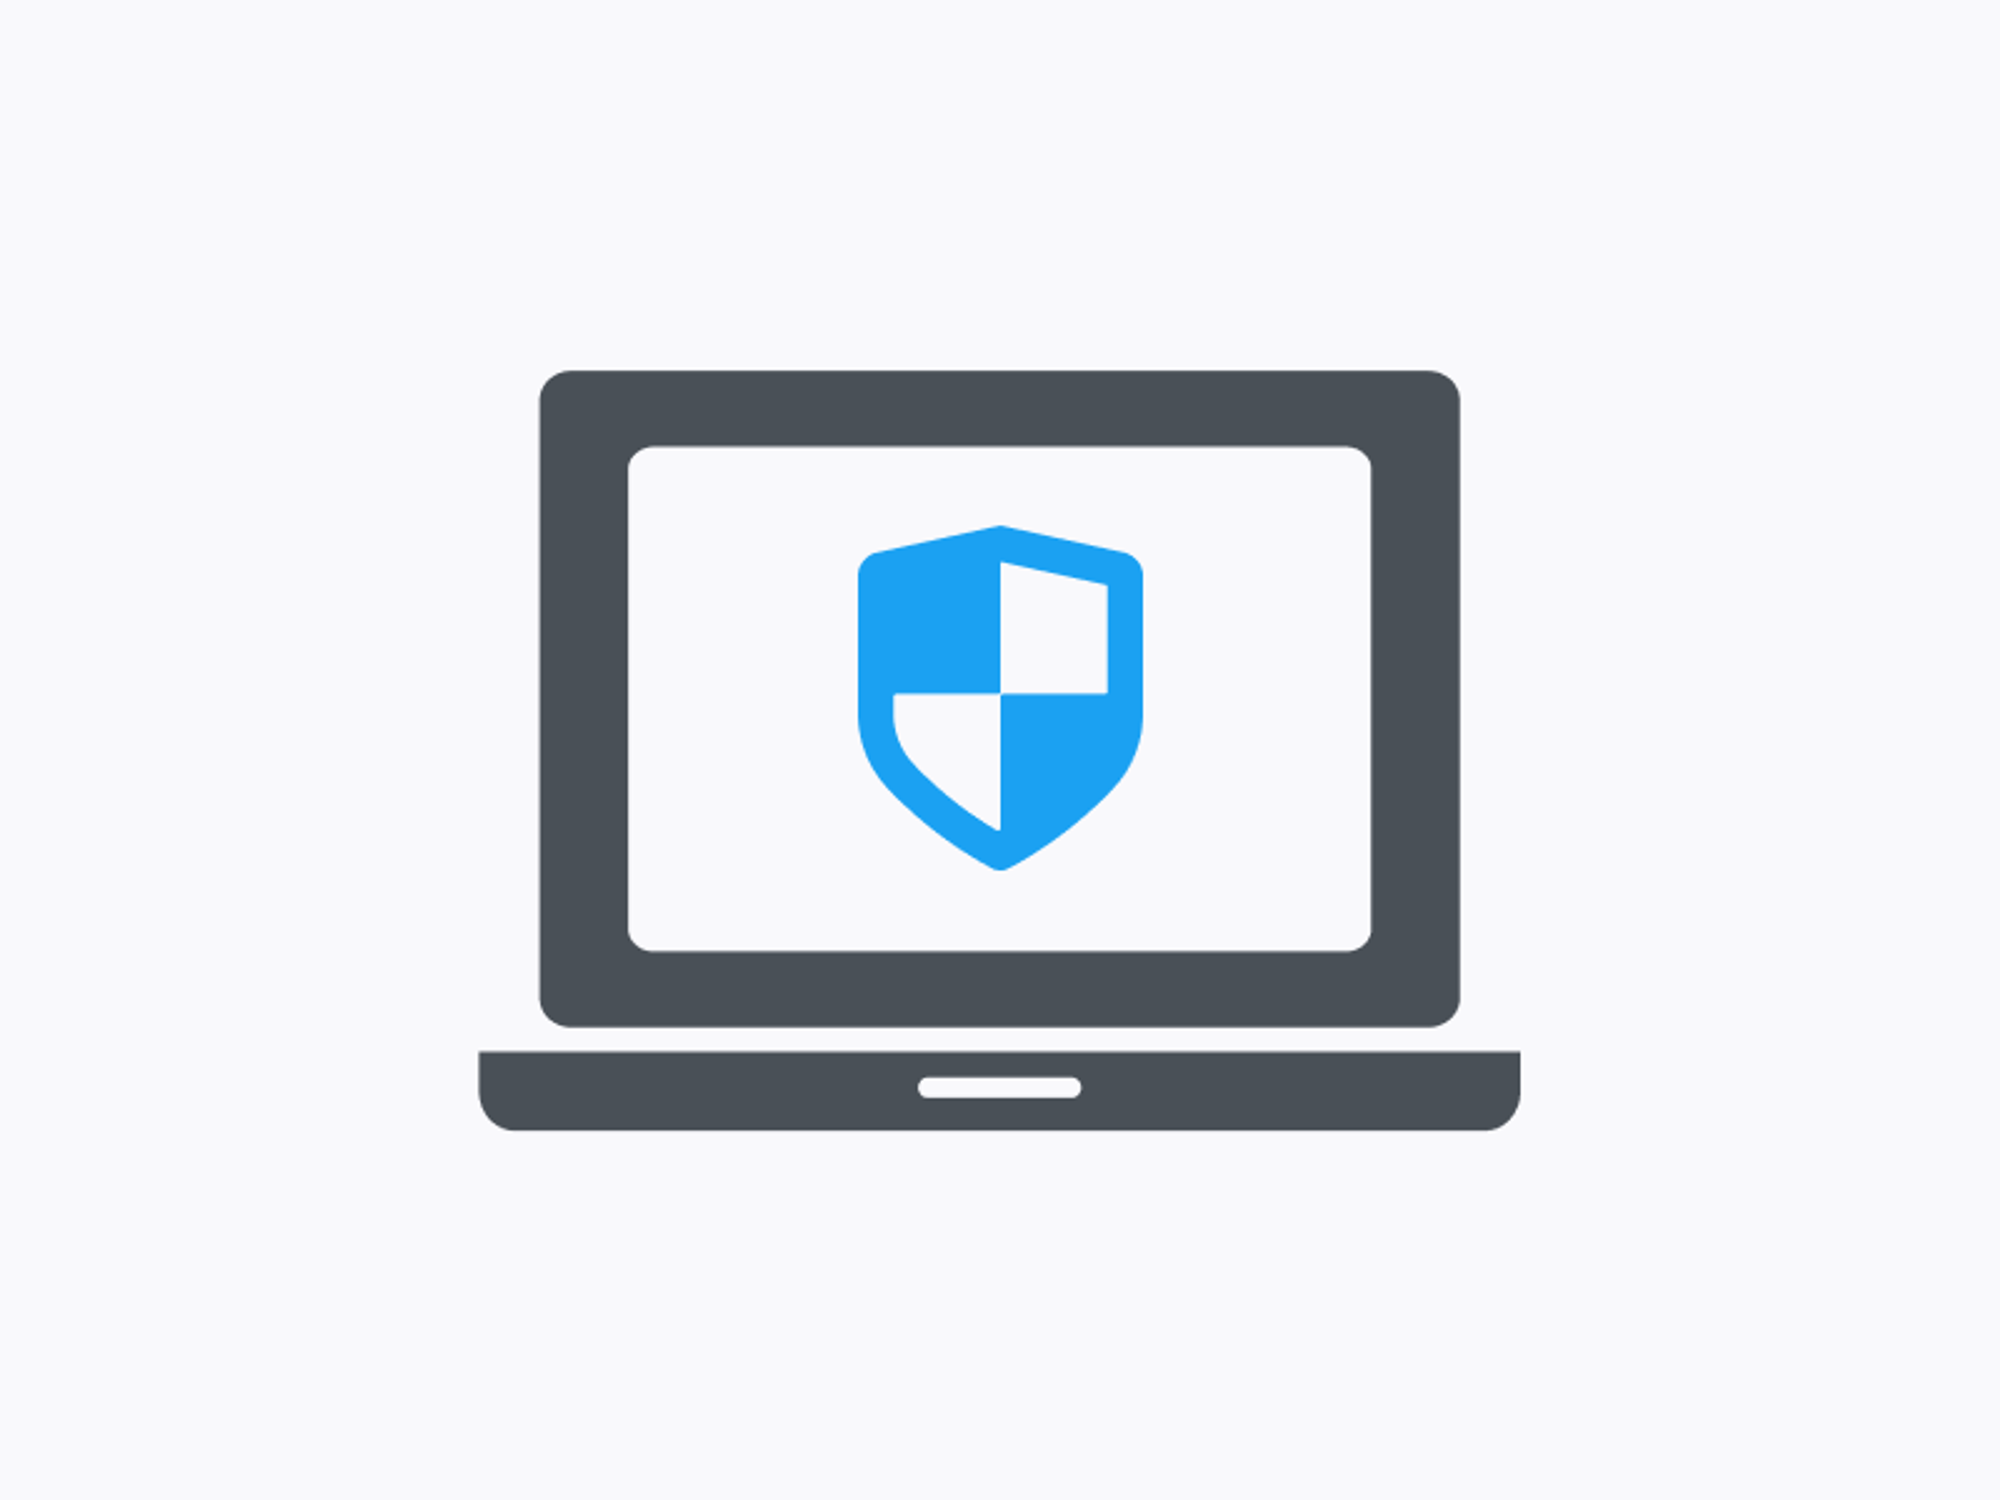 To prevent phishing attacks through malware, install and update anti-virus programs.